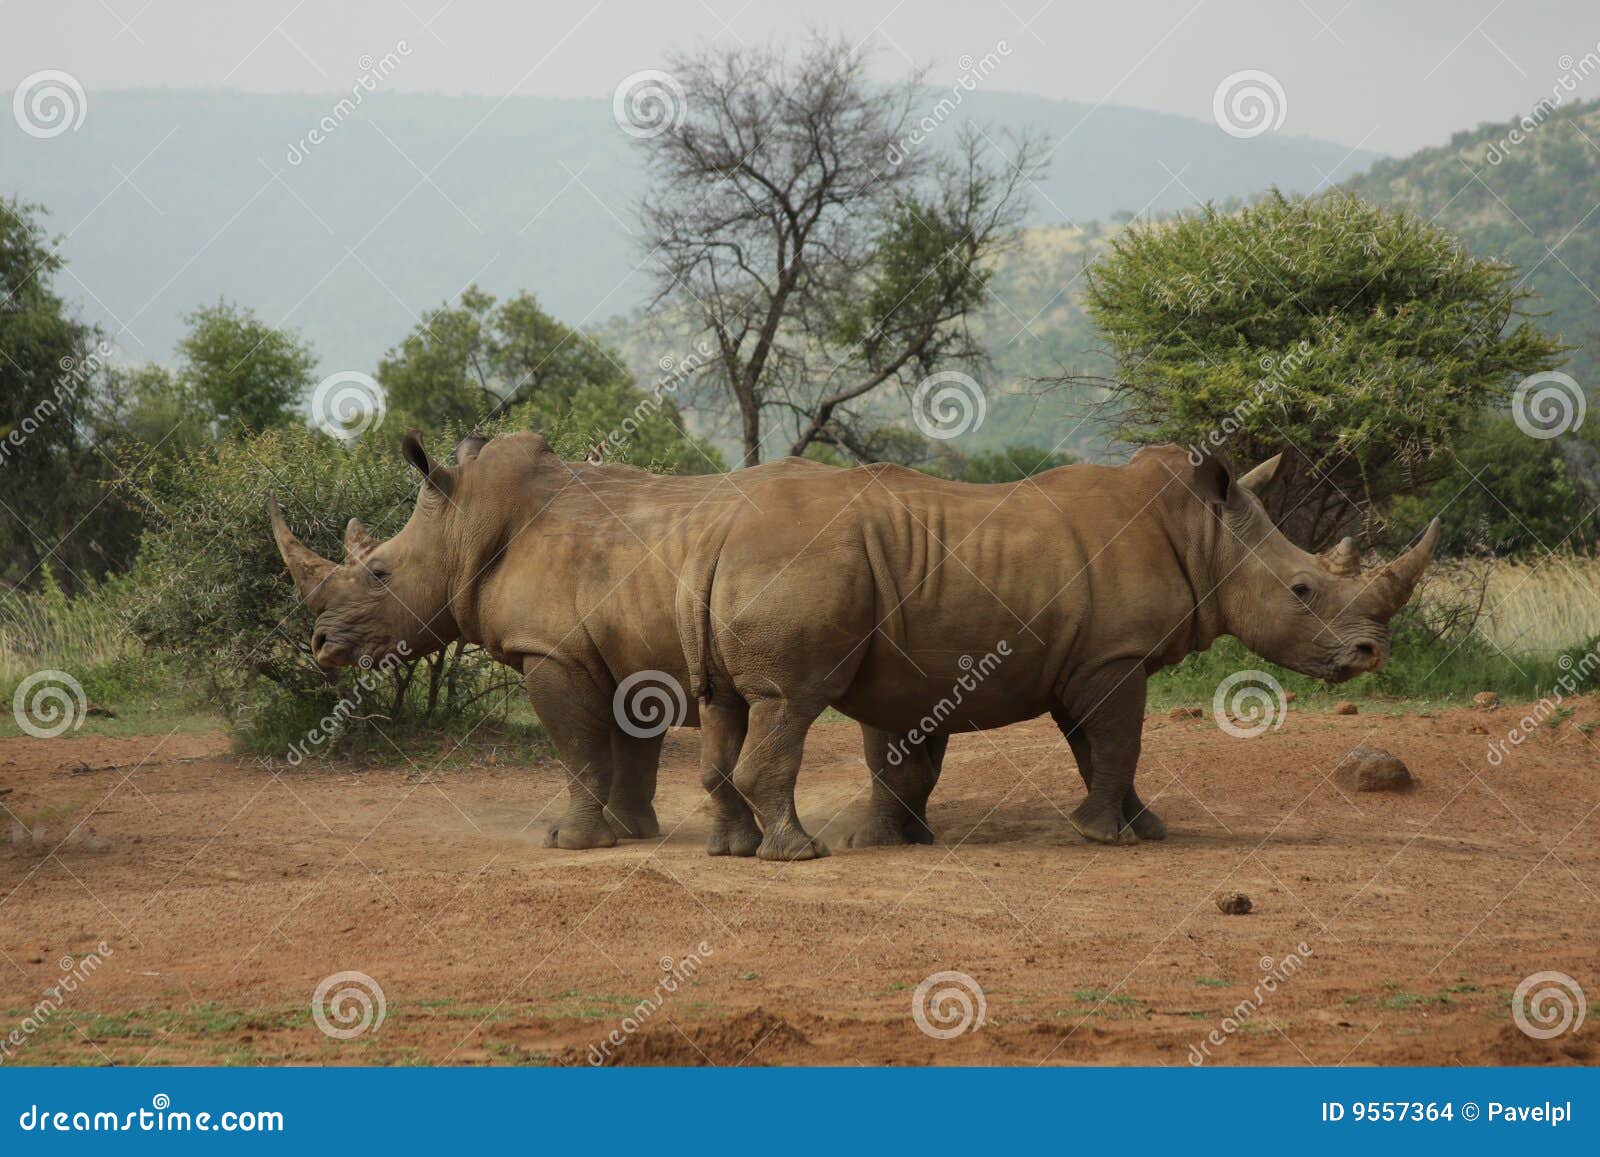 defending rhinos